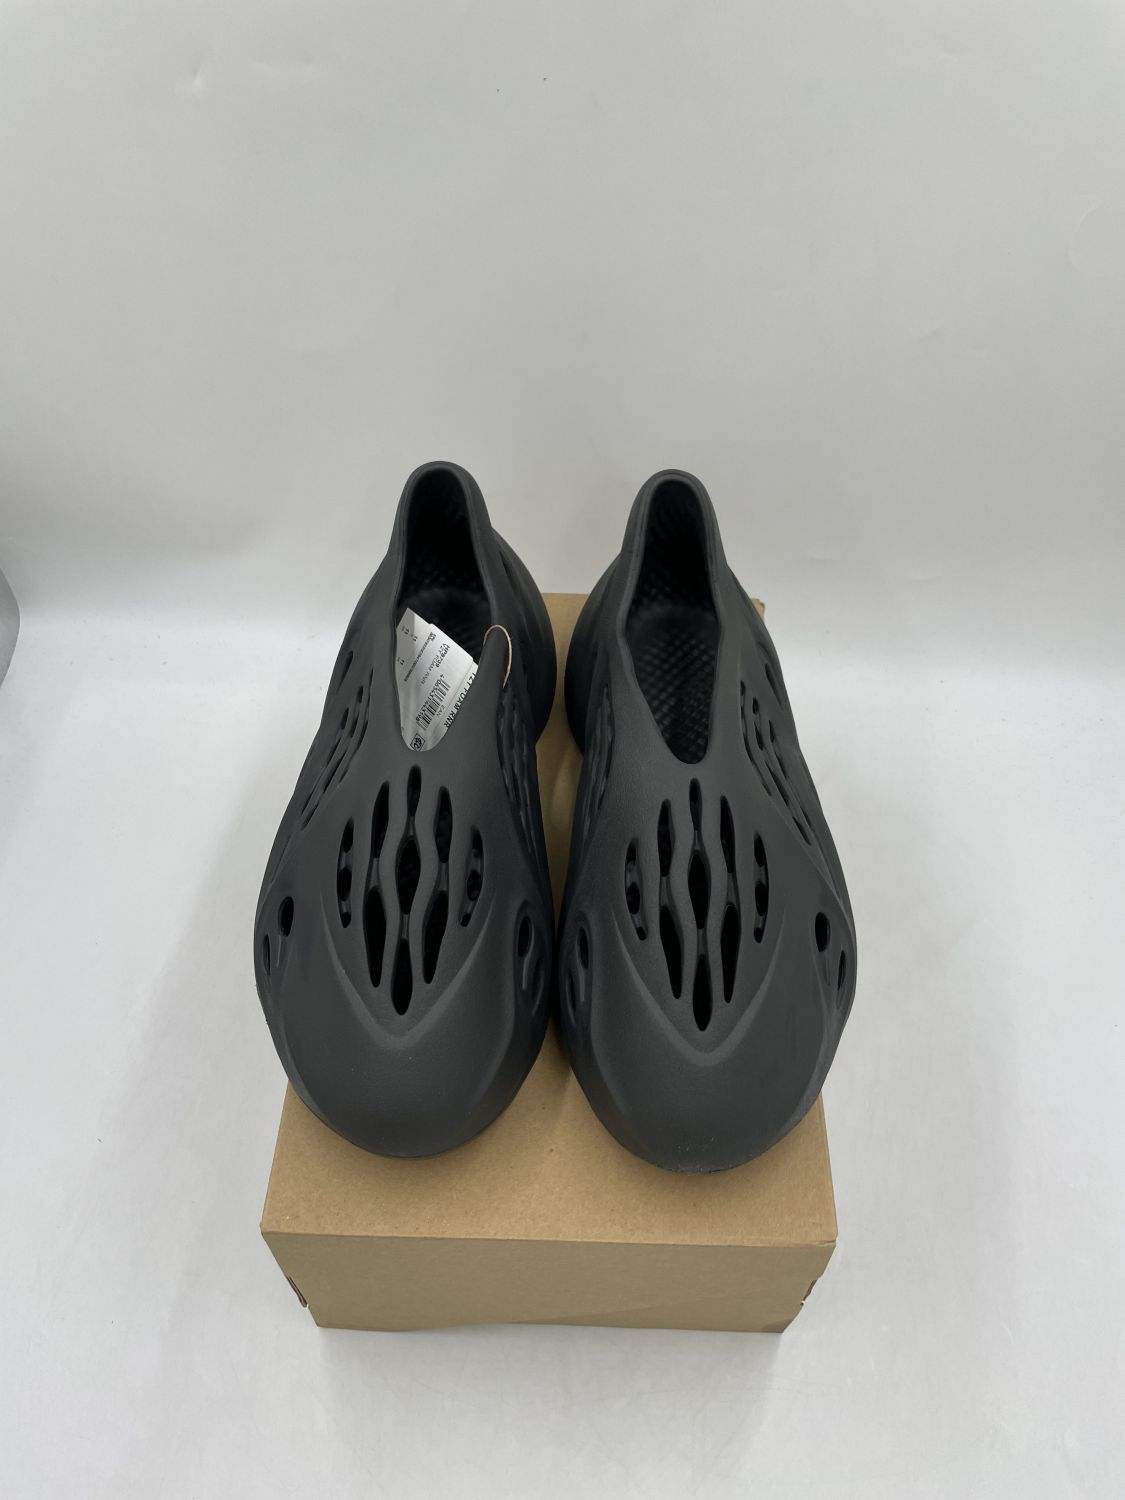 15841 - Adidas Yeezy Foam RNR Onyx | Item Details - AfterMarket